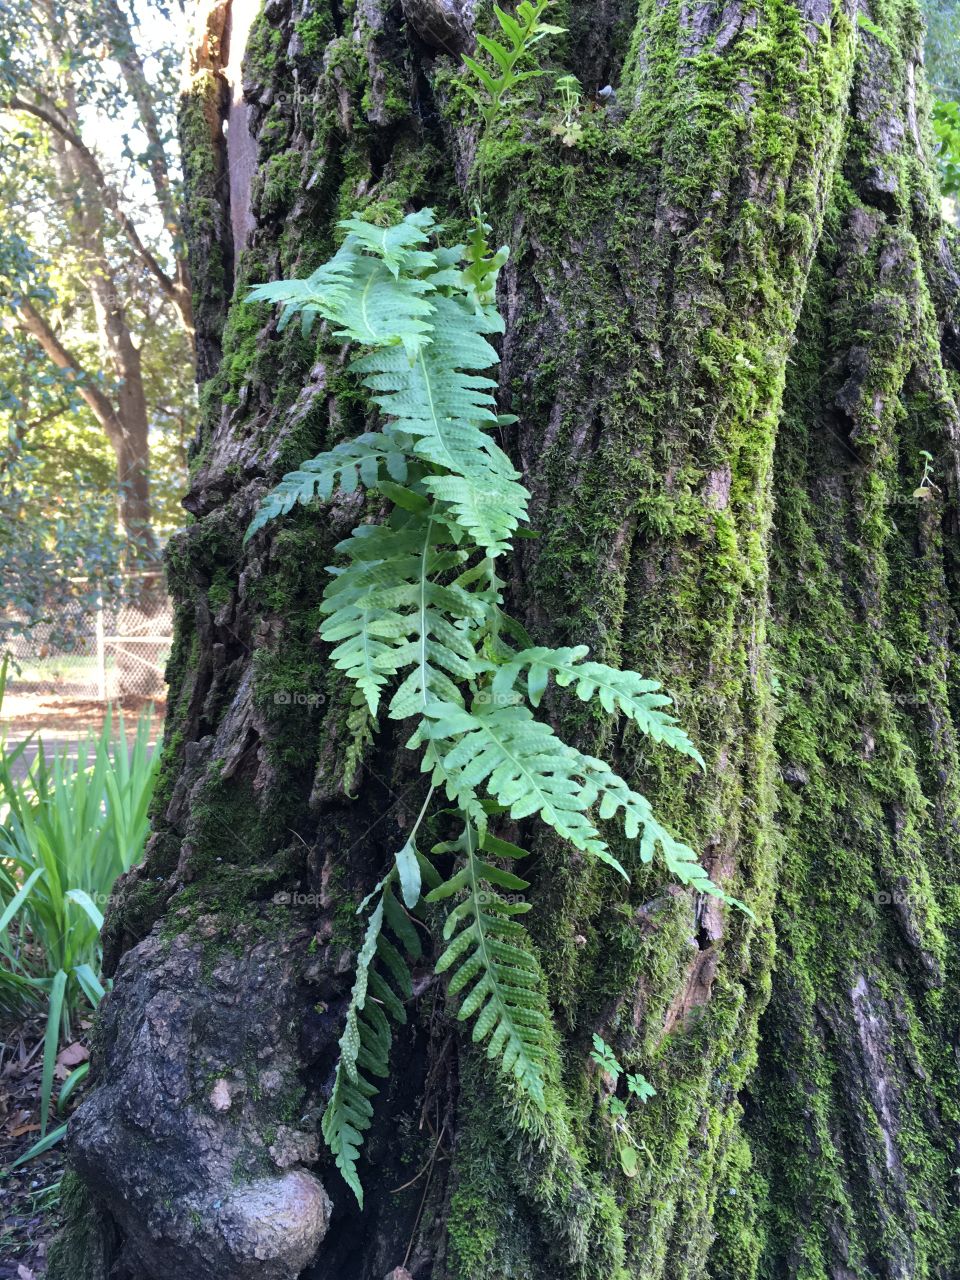 Mossy tree with ferns, Marin, California